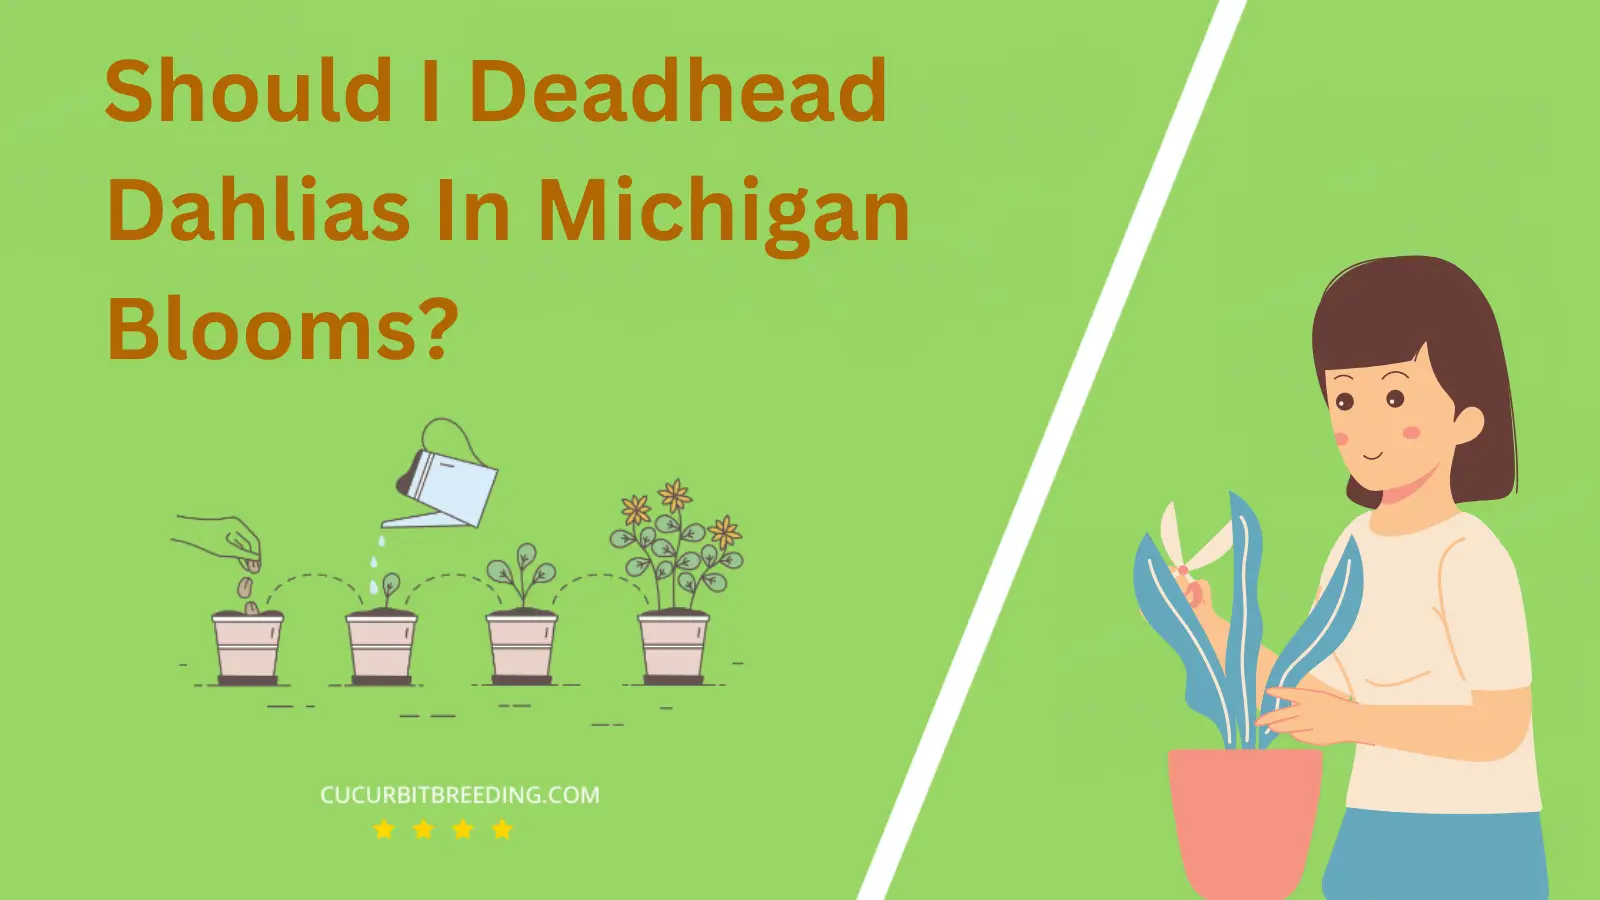 Should I Deadhead Dahlias In Michigan Blooms?